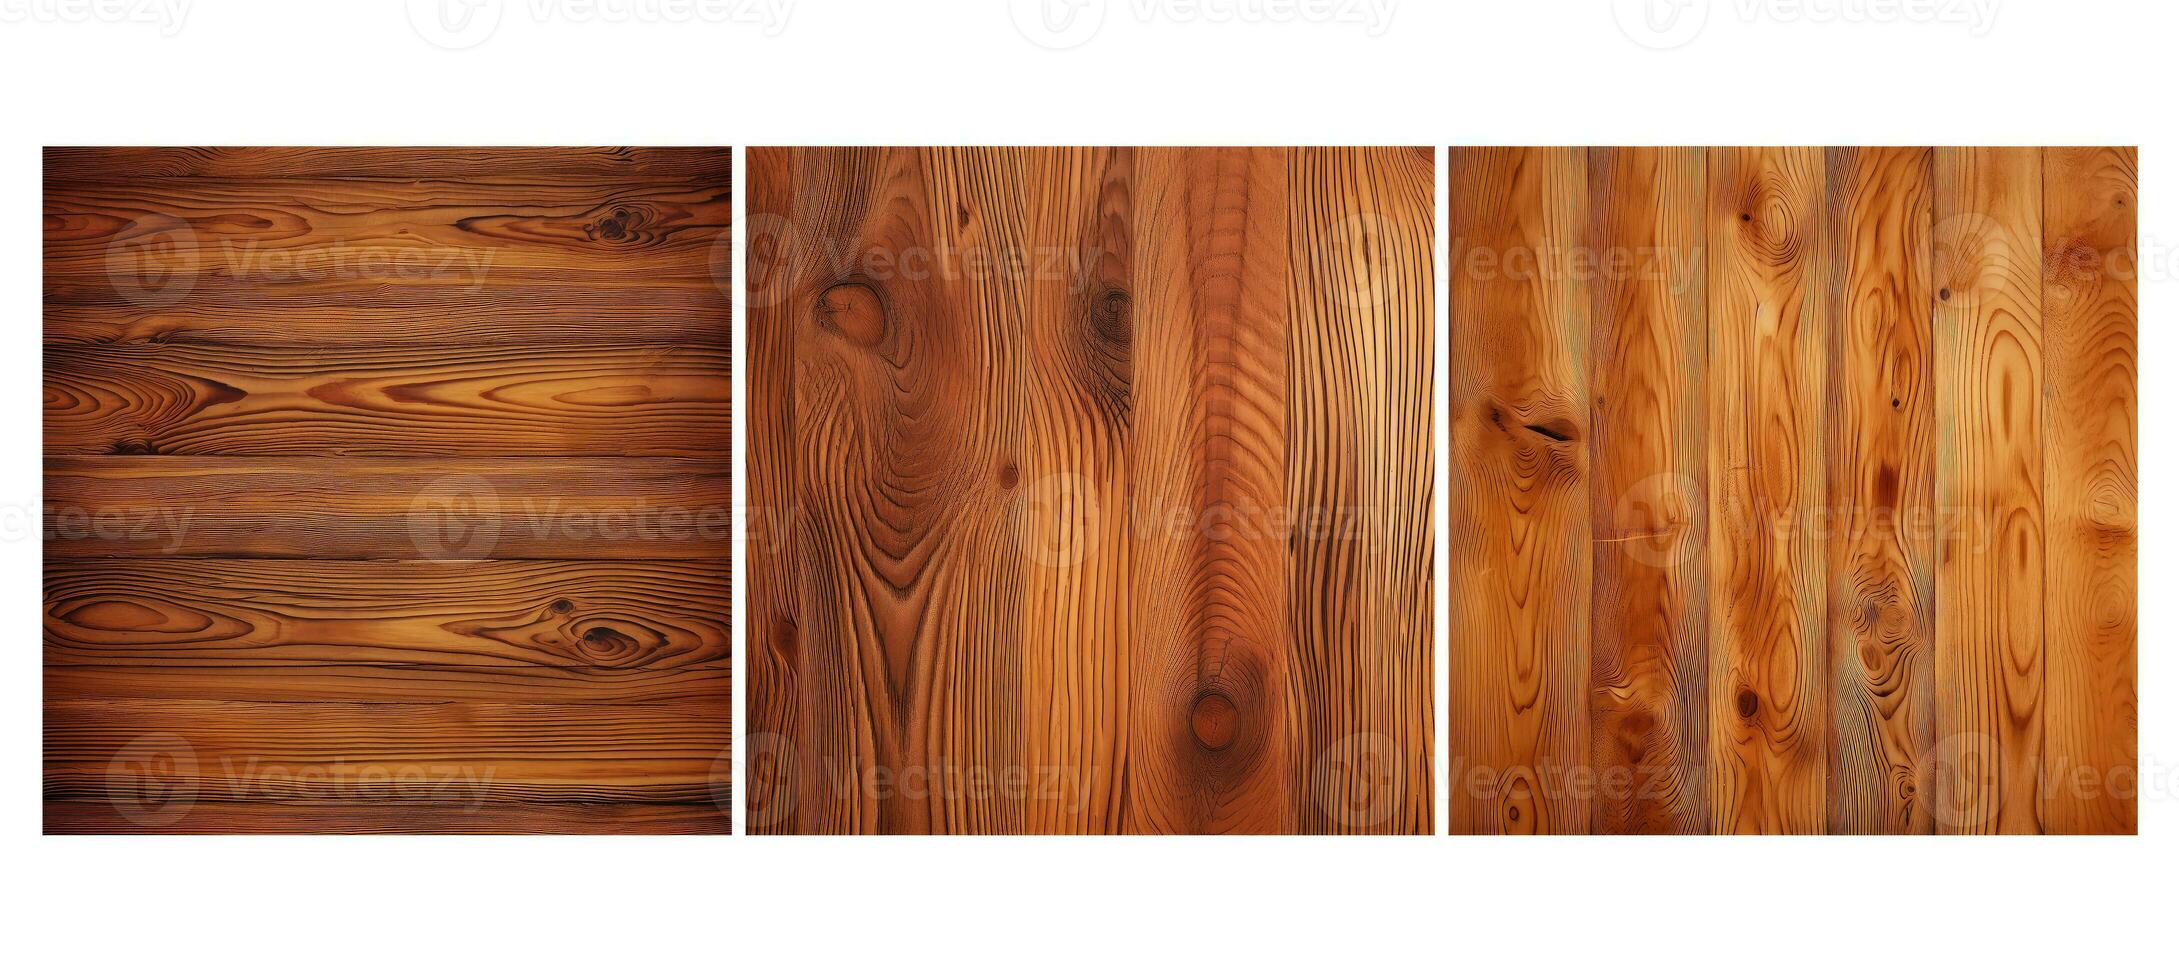 superficie abeto madera textura grano foto